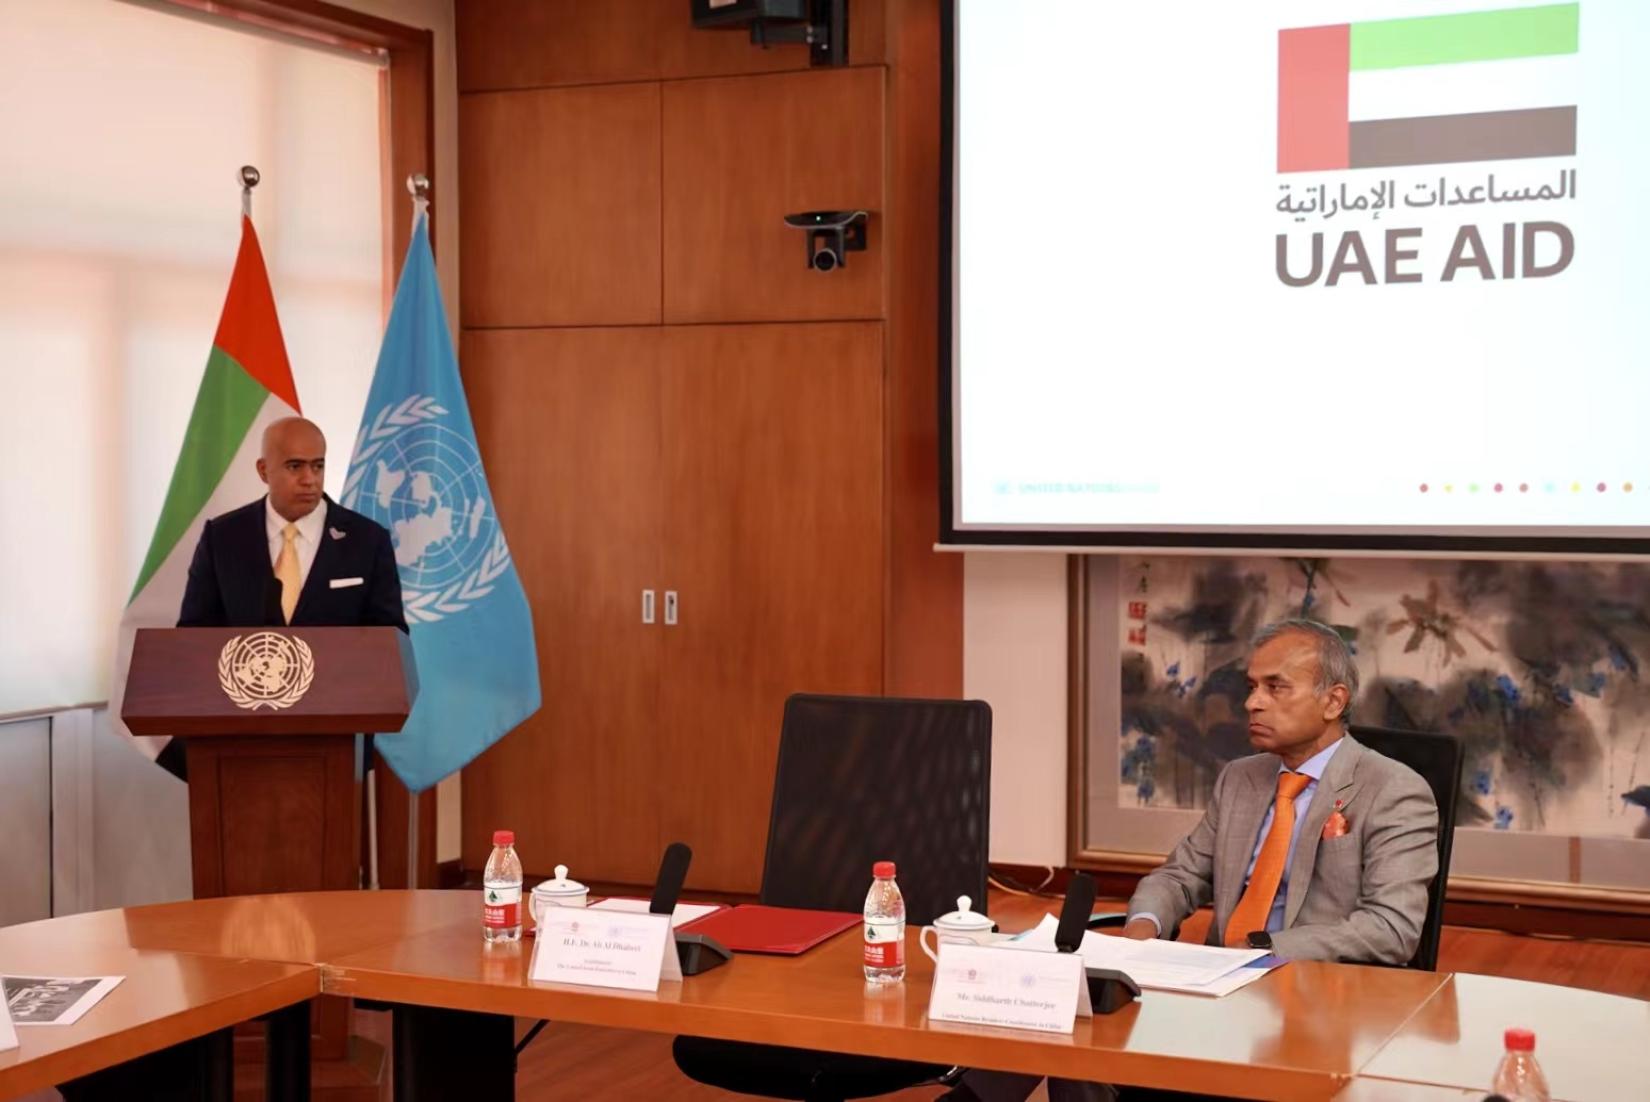 H.E. Dr. Ali Obaid Al Dhaheri, the UAE Ambassador to China